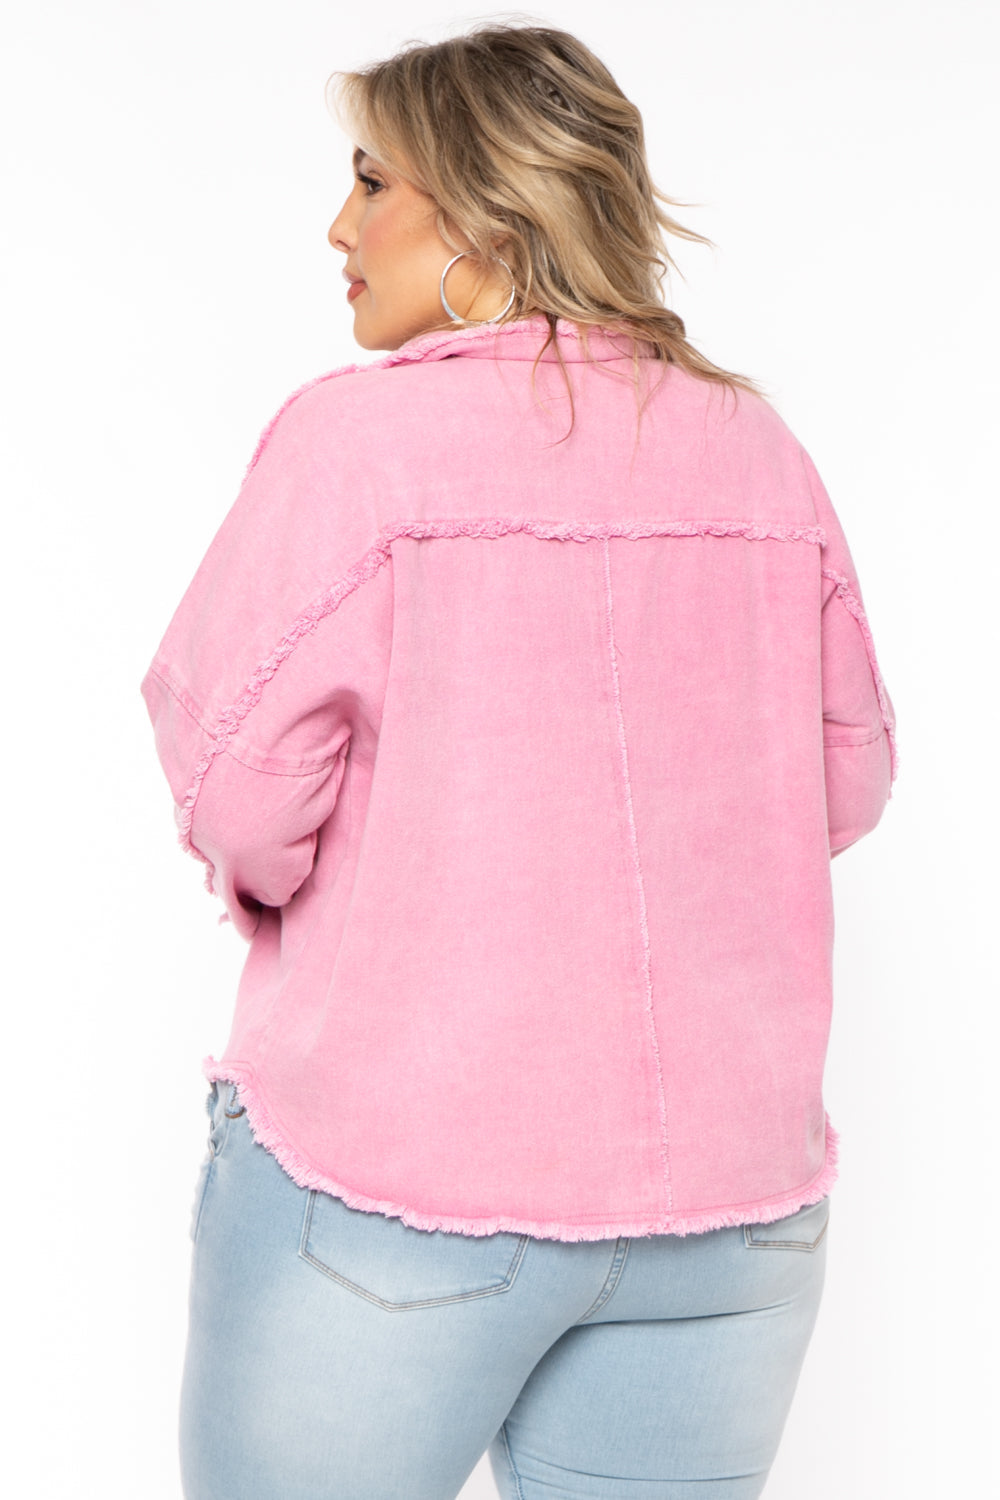 GEE GEE Jackets And Outerwear Plus Size Rhinestone Denim Jacket -  Pink